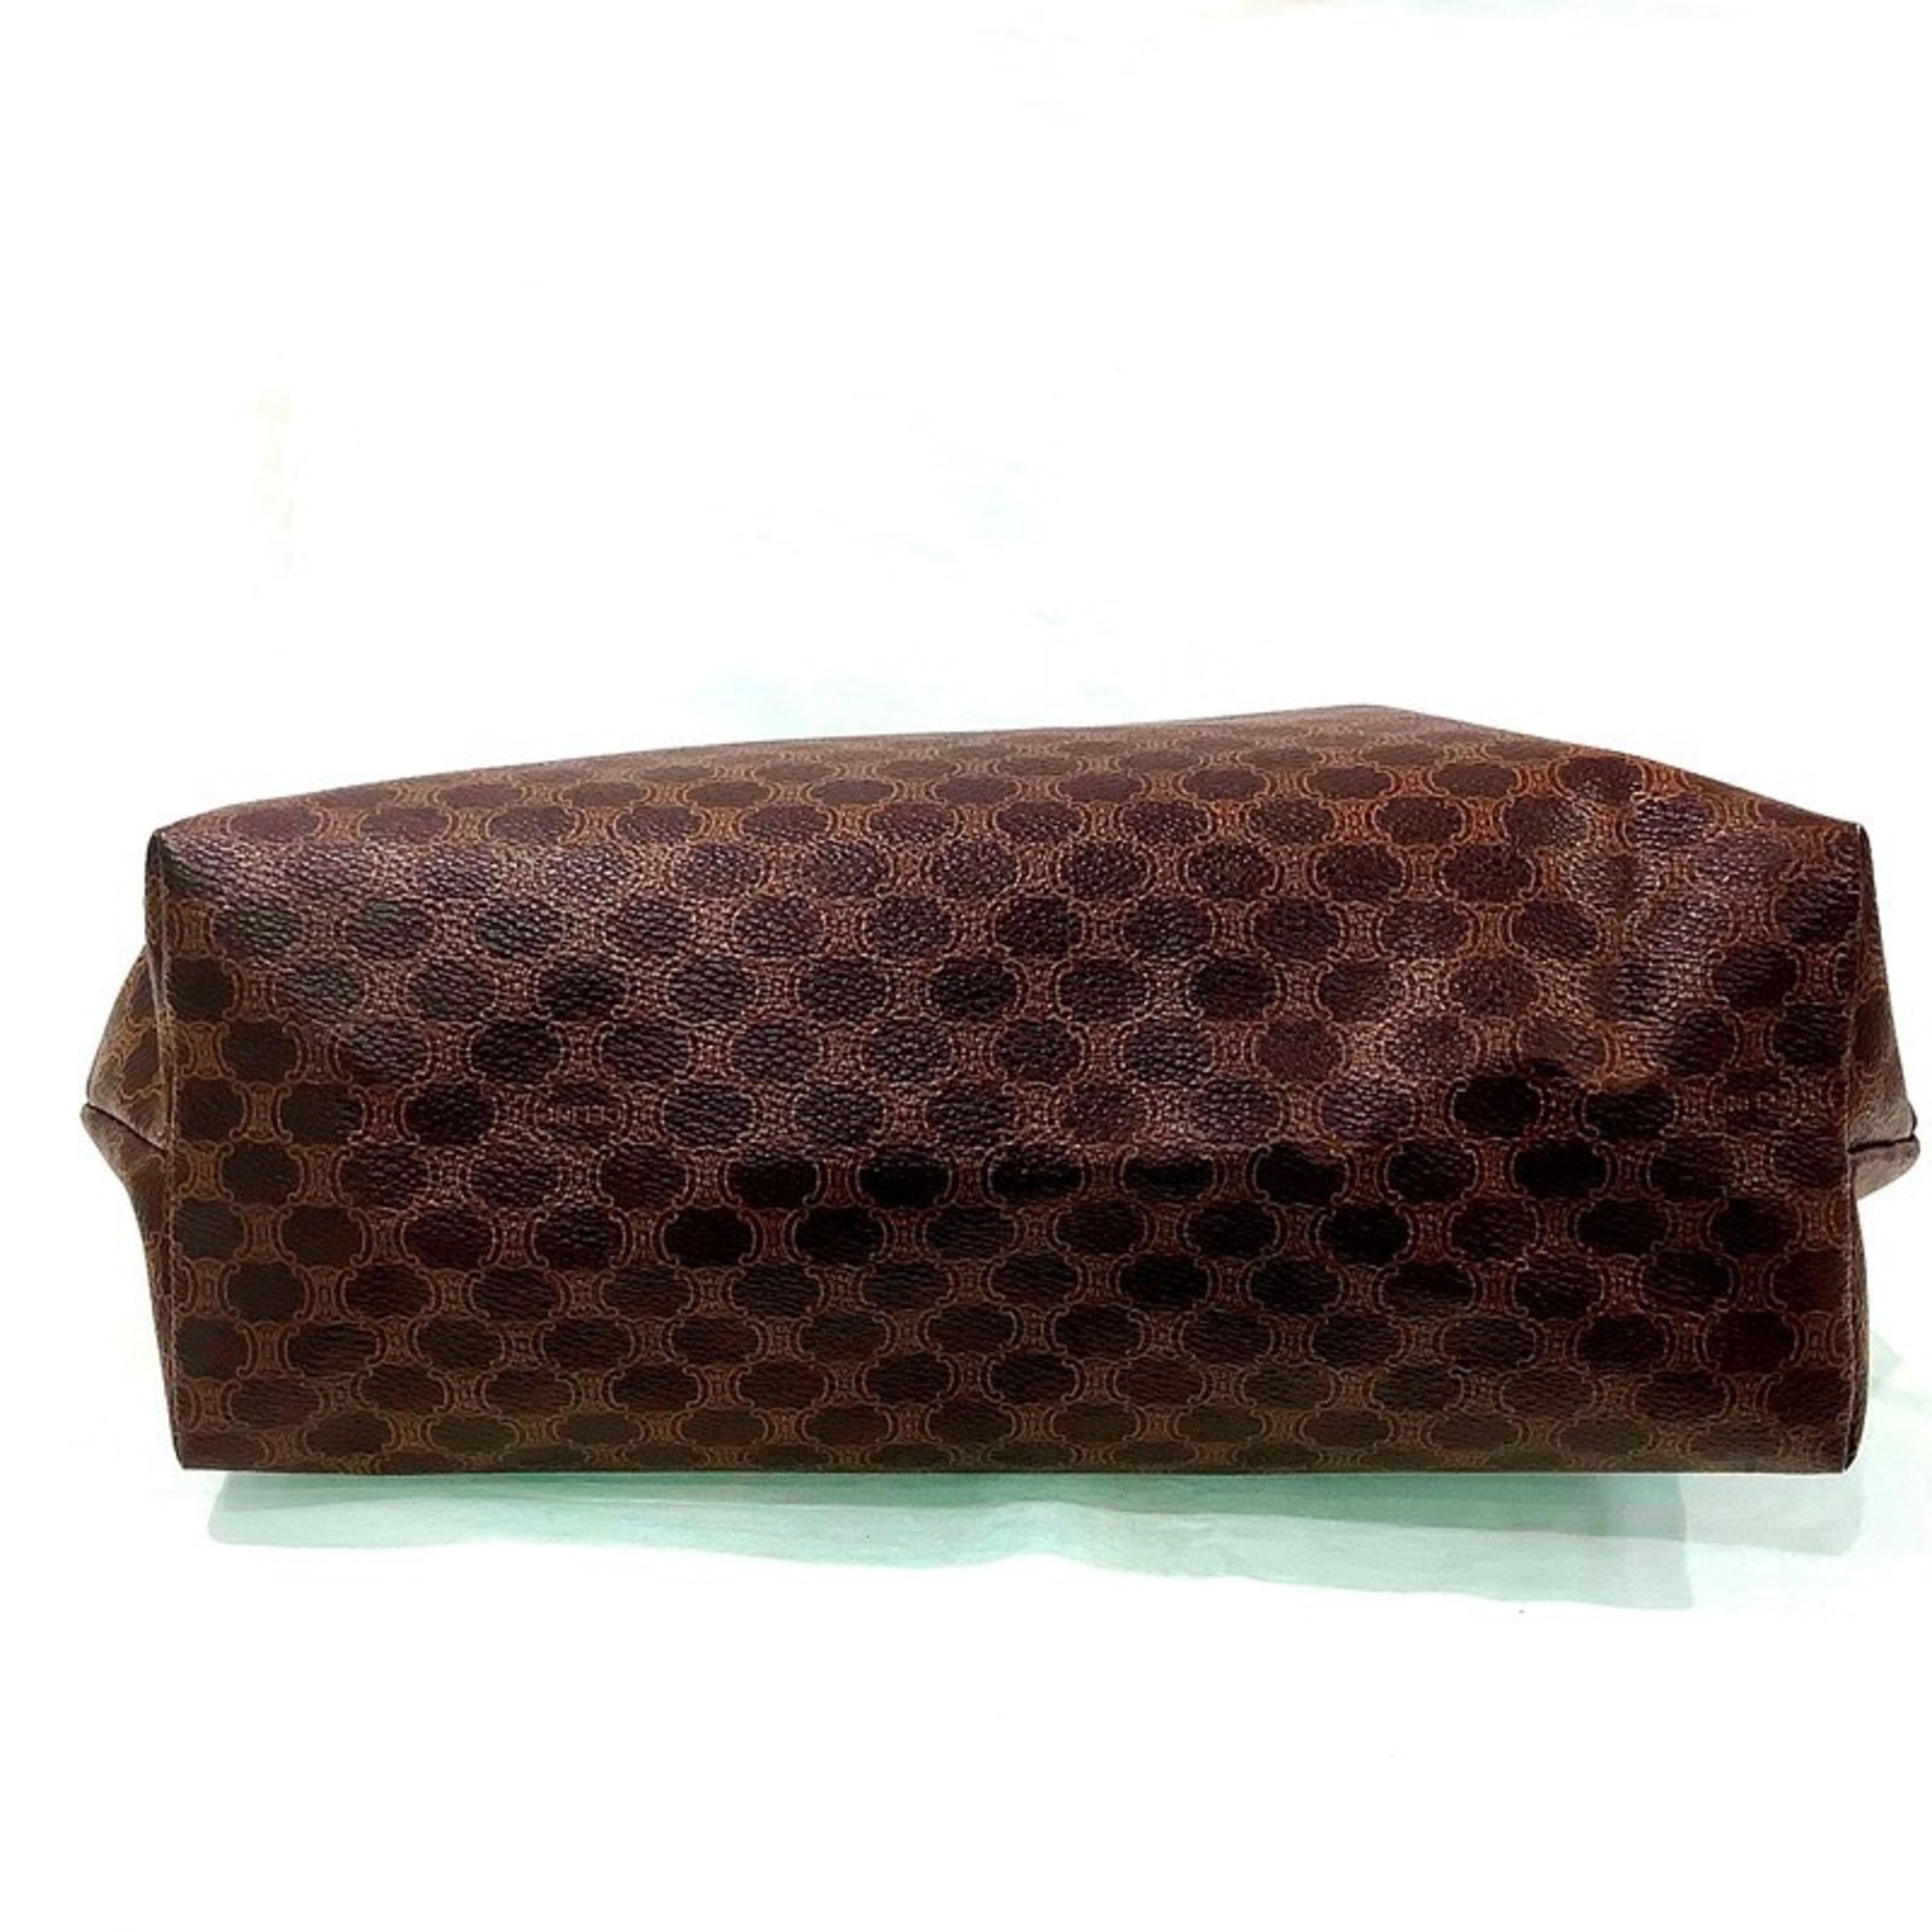 CELINE Second Bag Macadam Pattern Pouch Brown Inside is torn Slightly sticky KB-8275